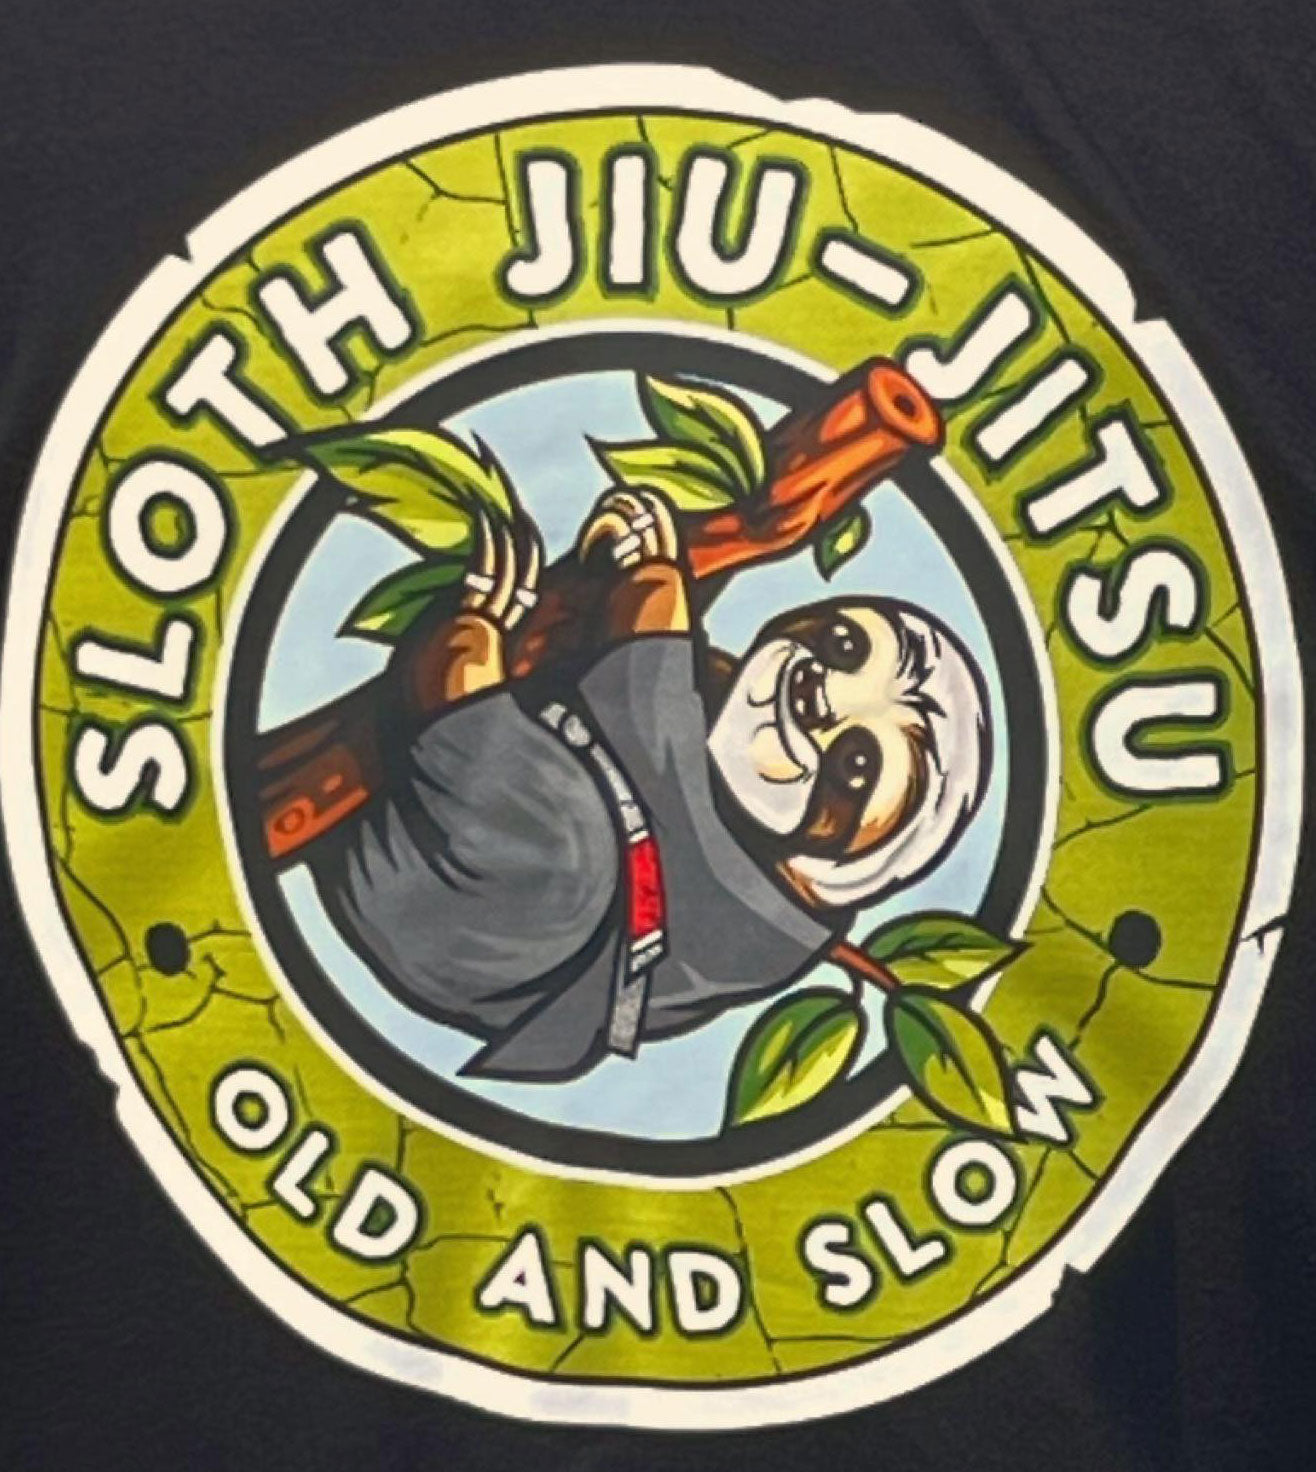 Sloth Jiu-Jitsu T-Shirt